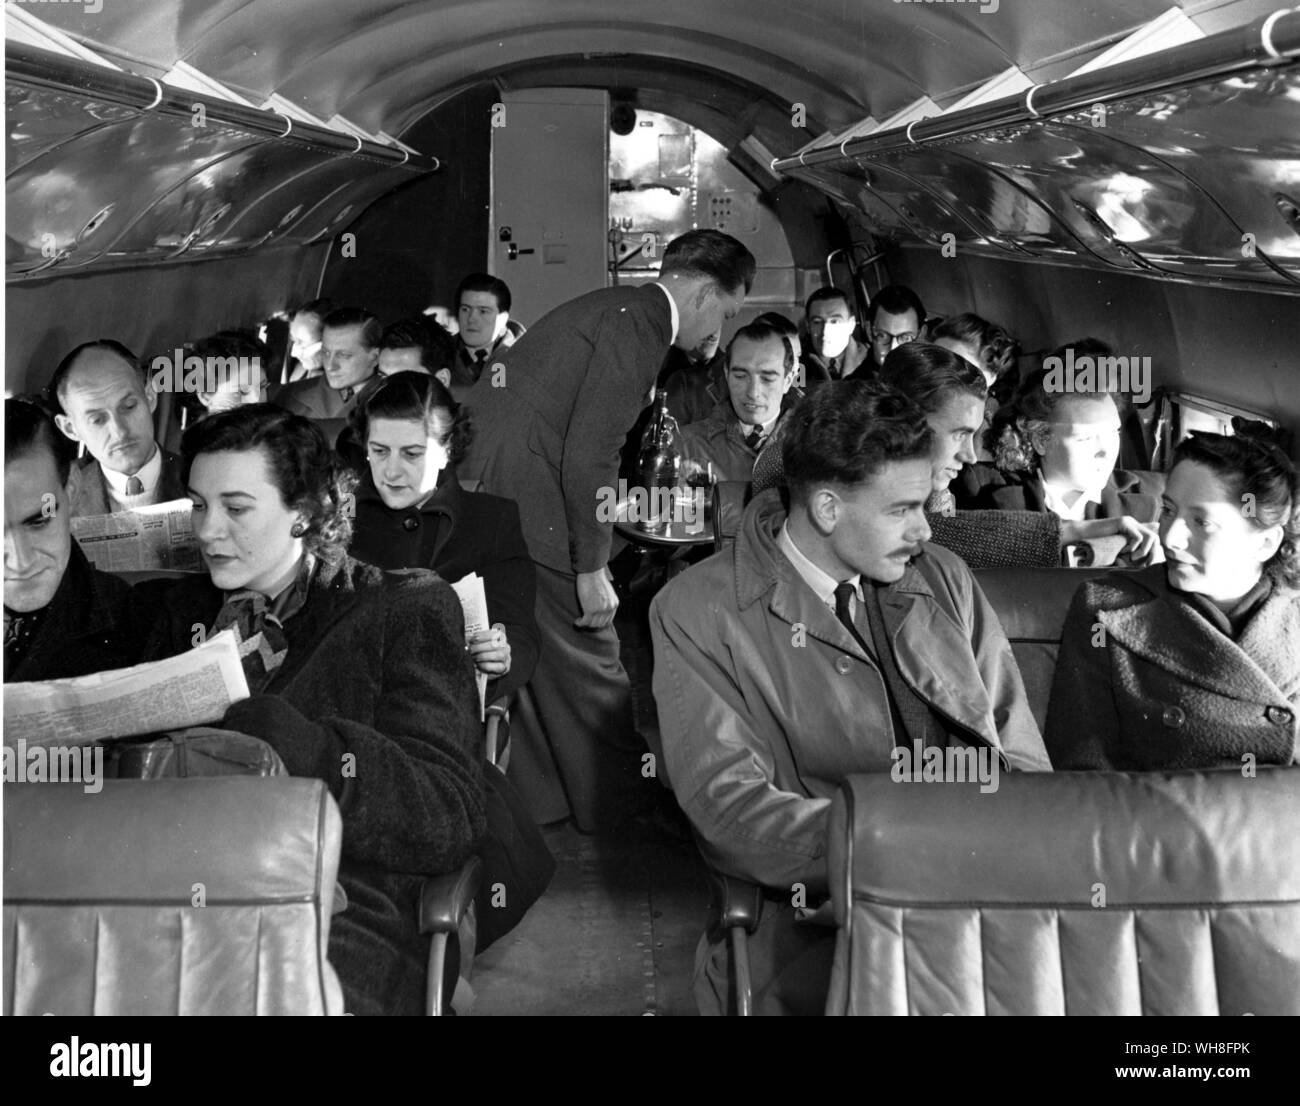 Travelling with British Airways. Stock Photo